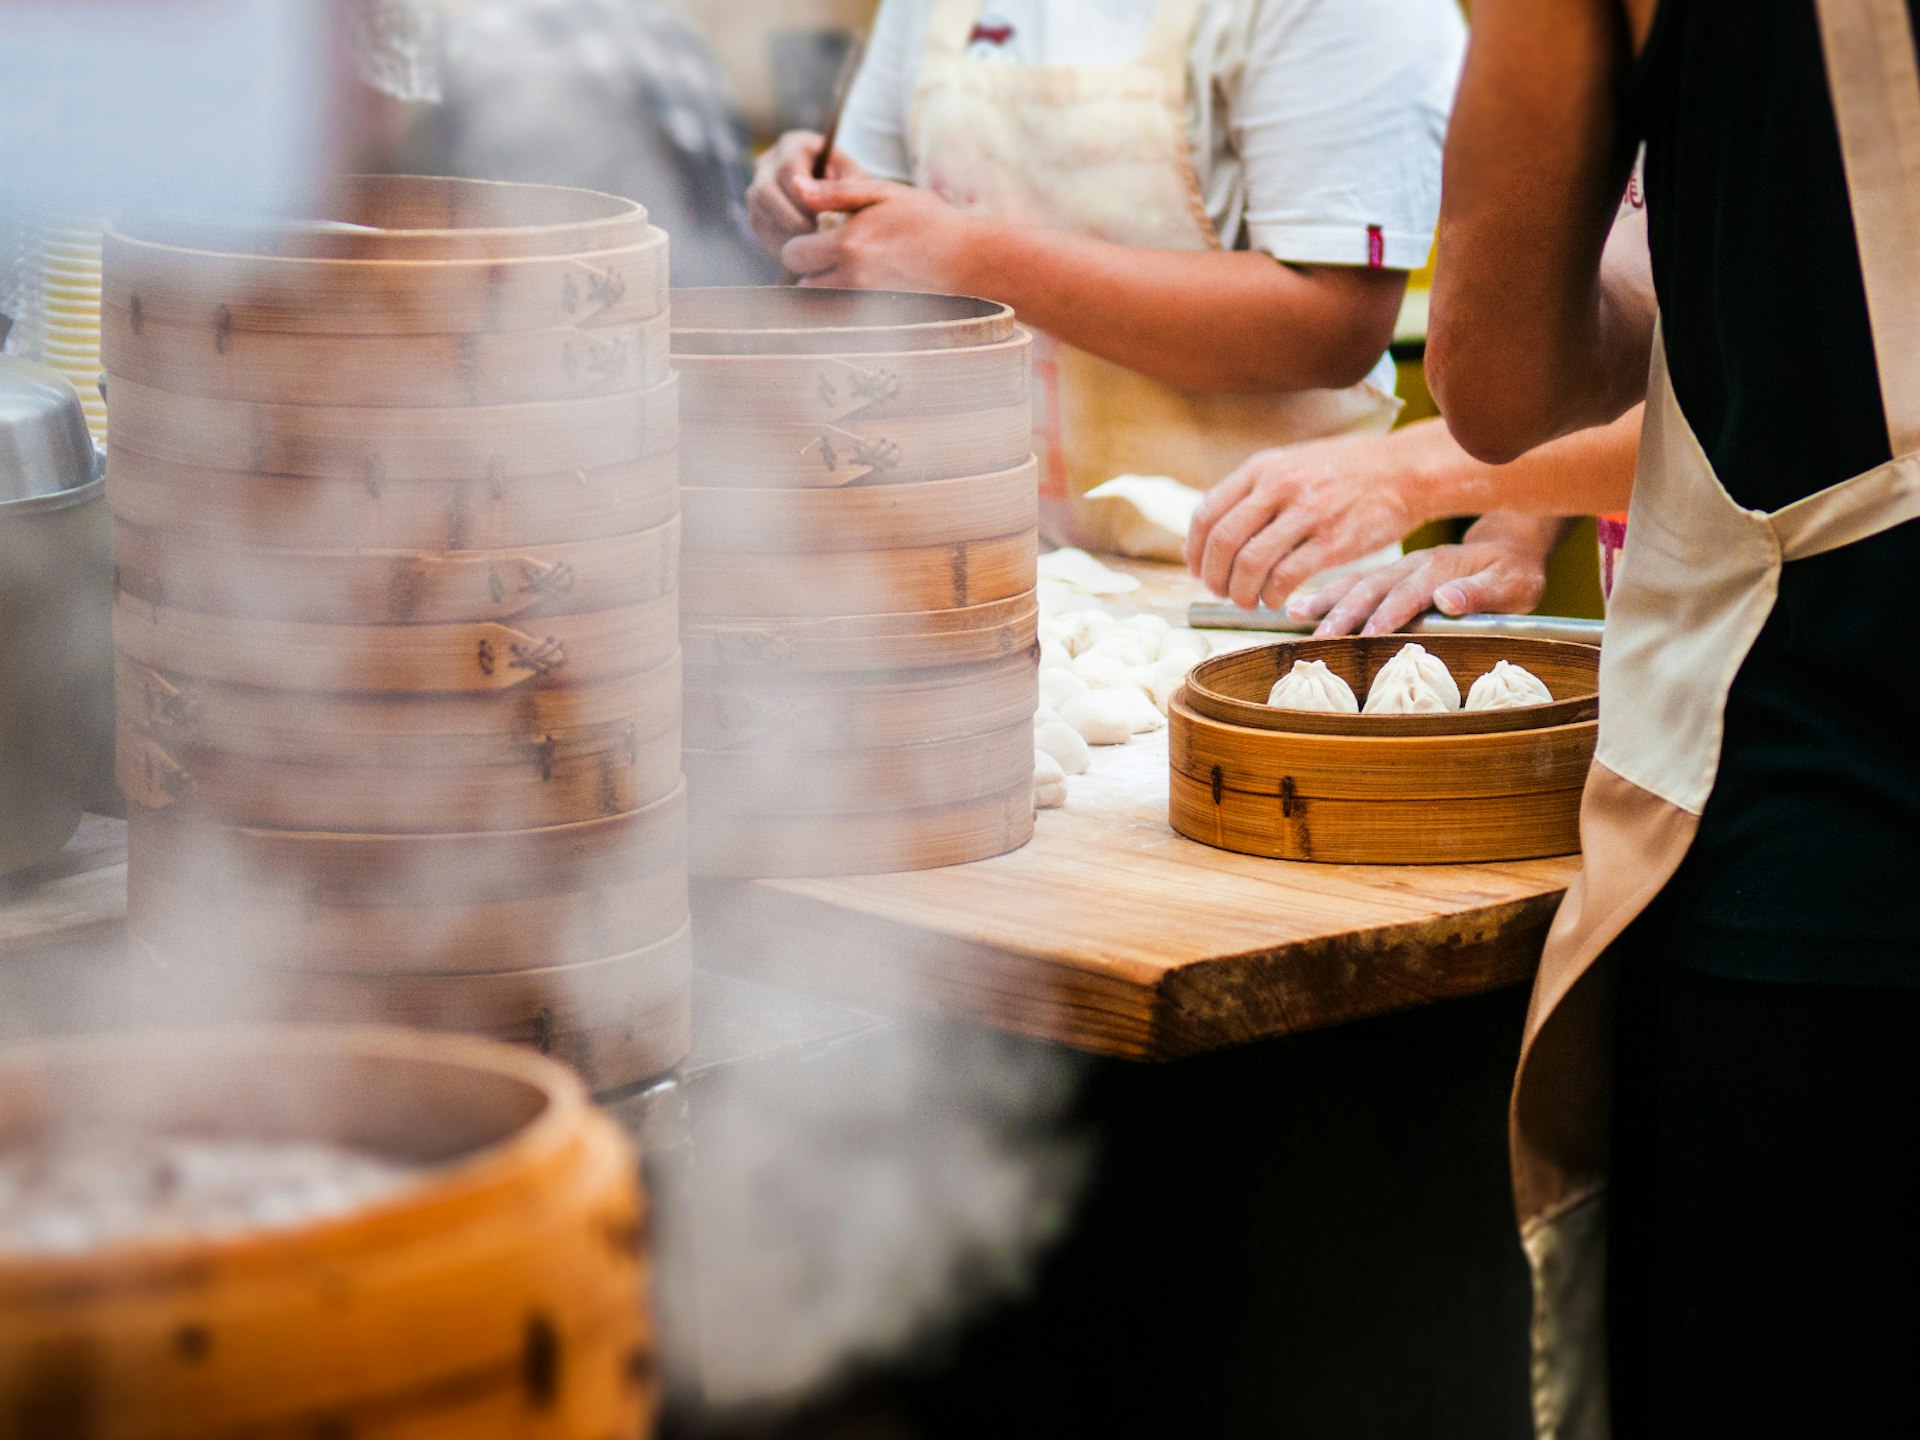 People making xiaolongbao dumplings in Shanghai © PixHound/ Shutterstock